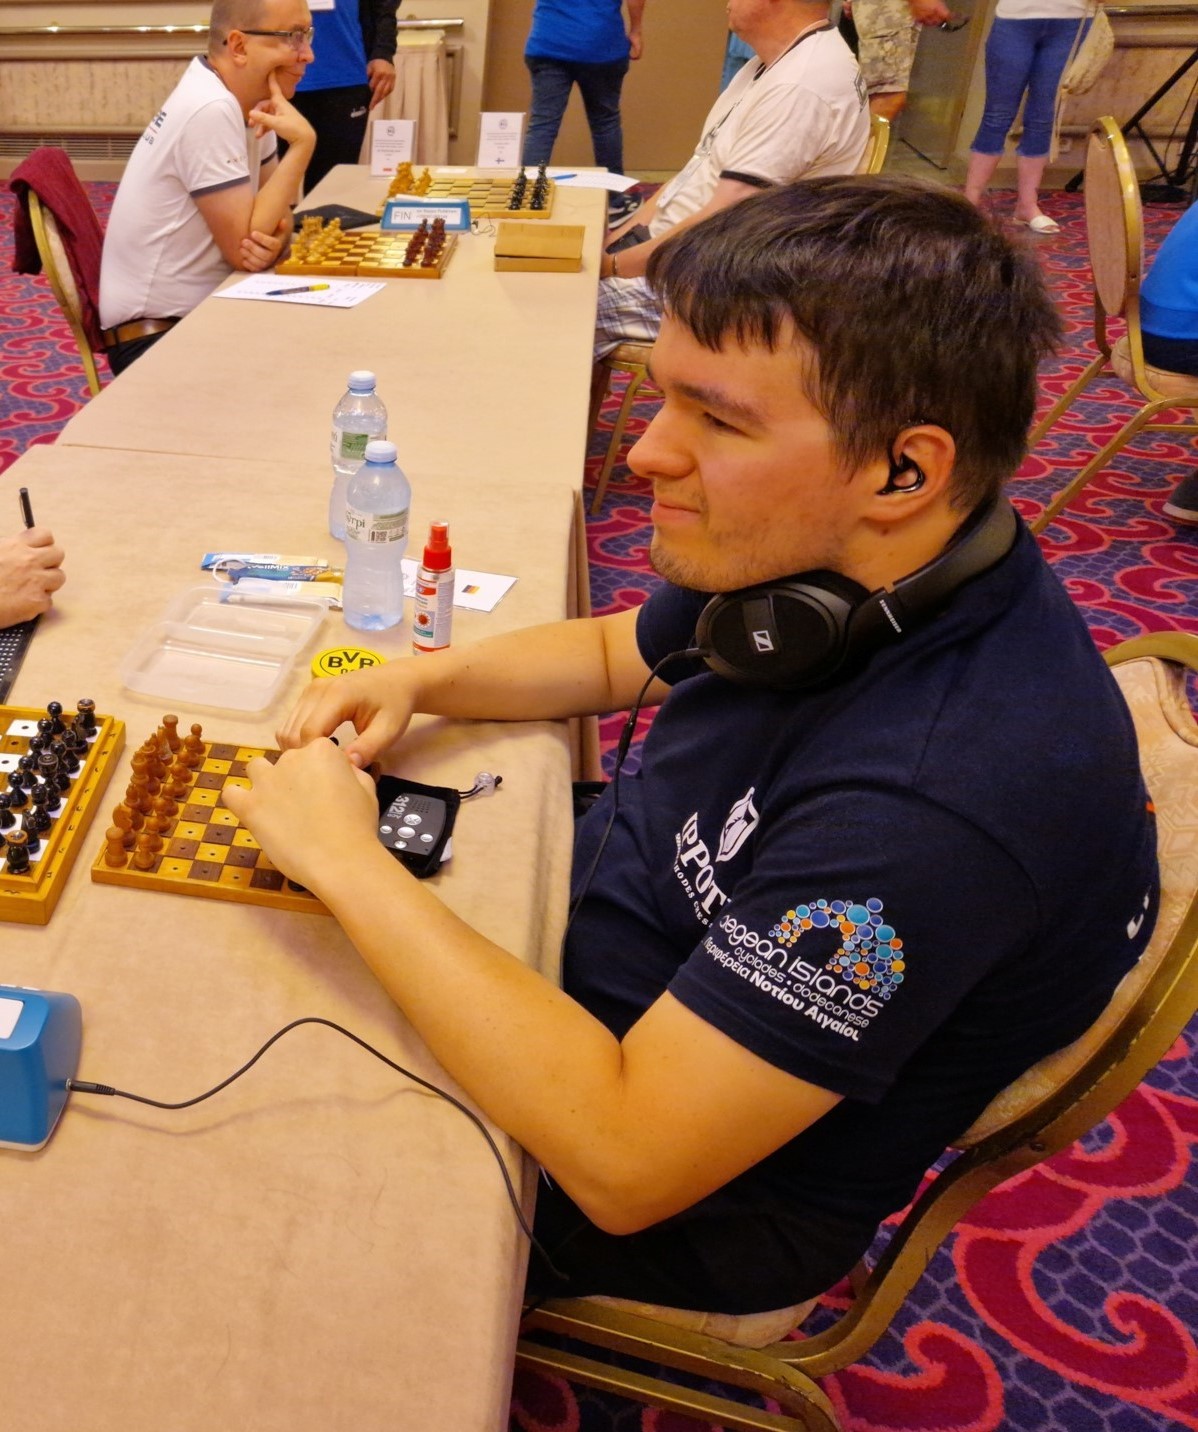 Montenegro - International Braille Chess Association (IBCA